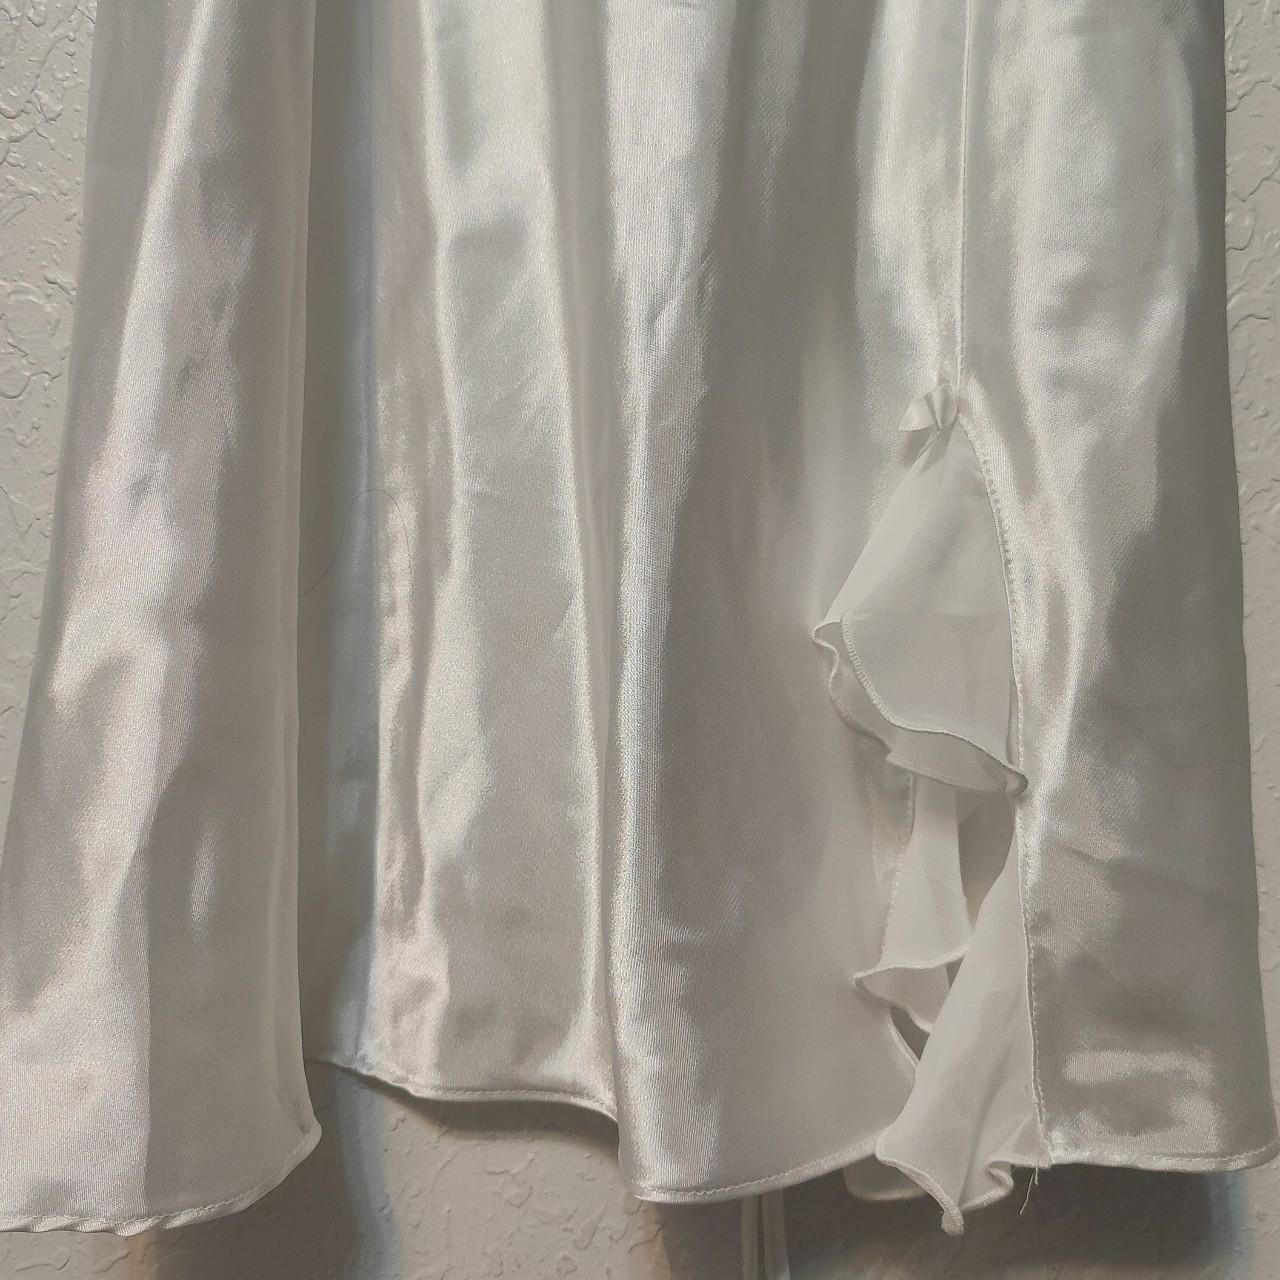 Linea Donatella Women's White Robe (3)